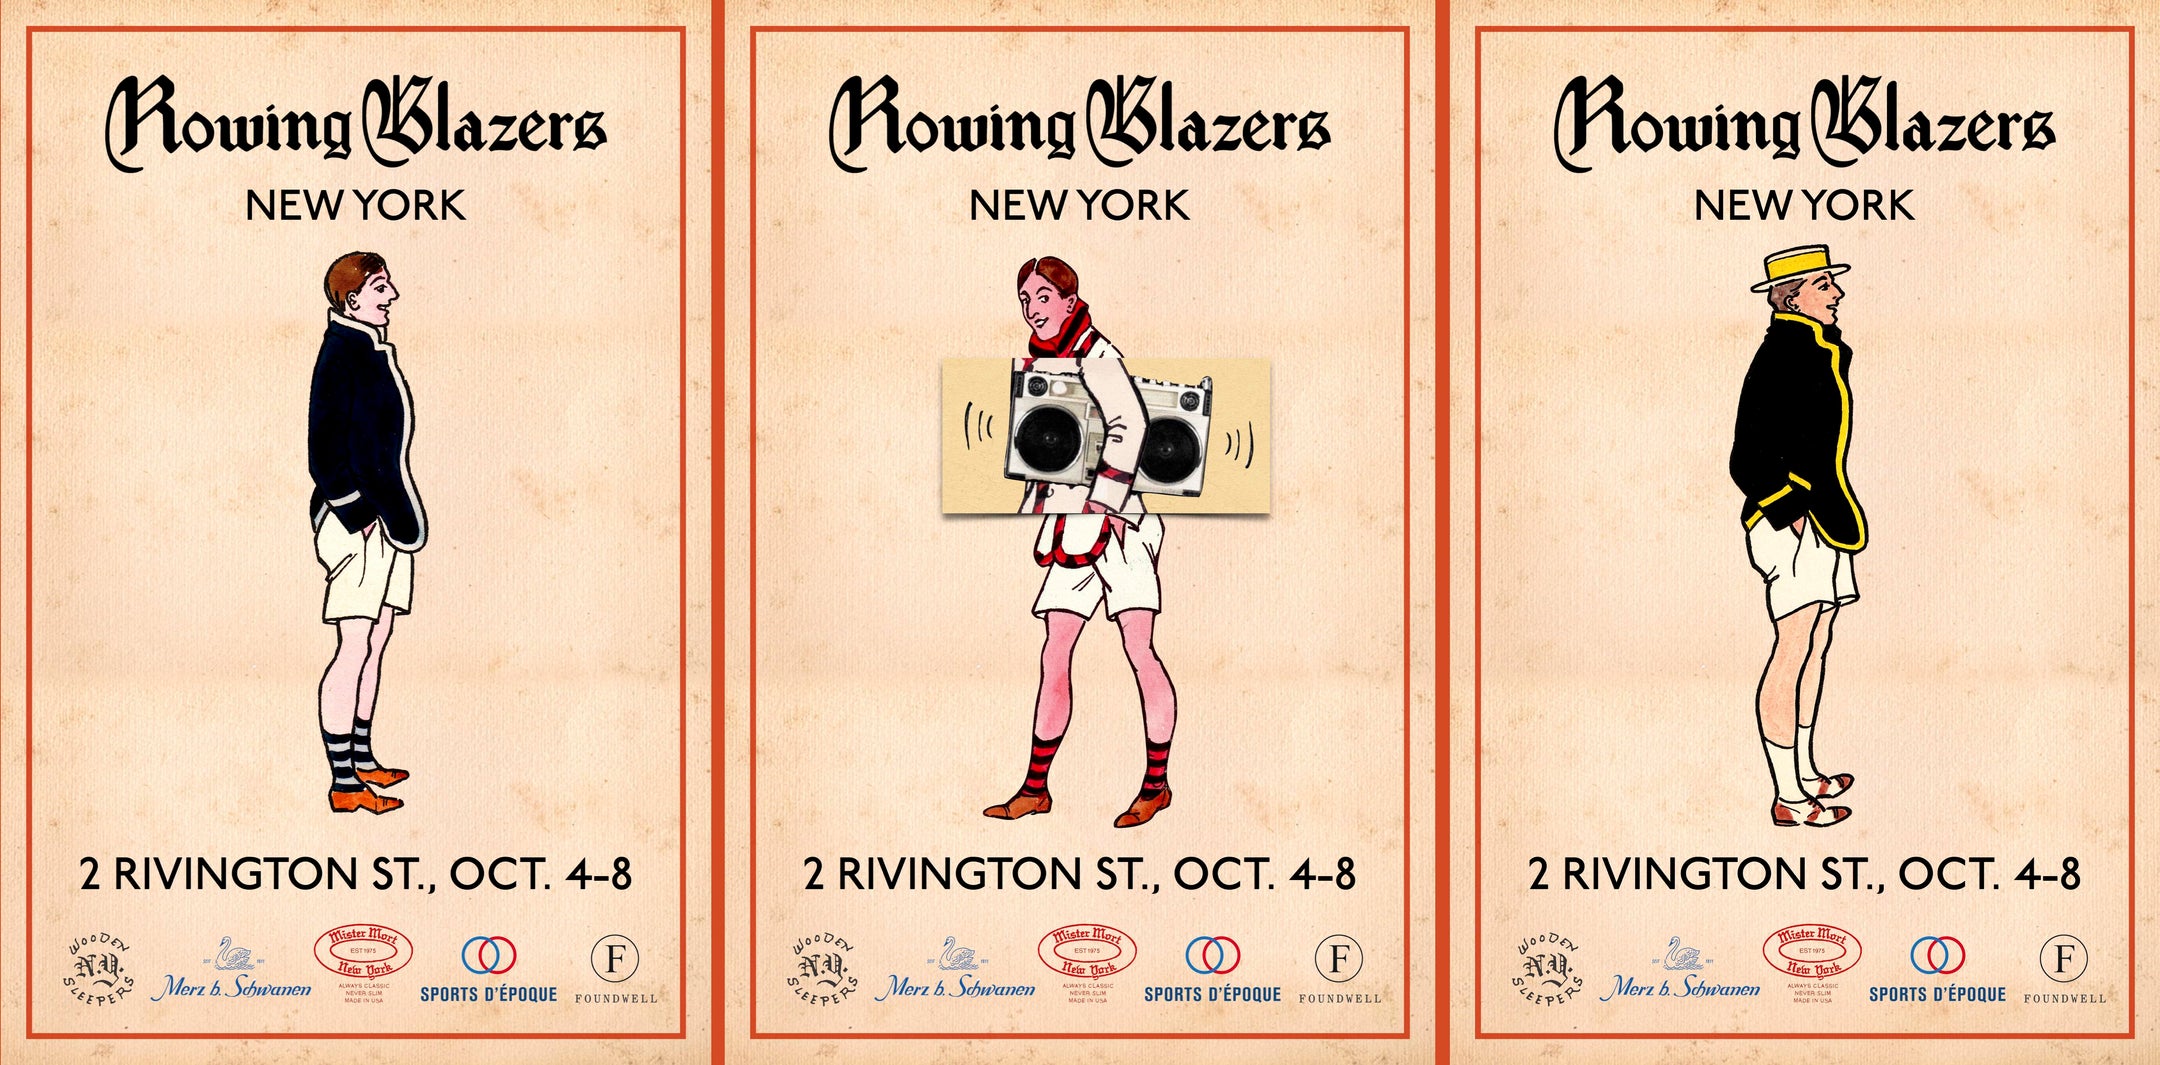 Rowing Blazers NYC Pop-Up Shop! (2 Rivington Street, October 4-8)